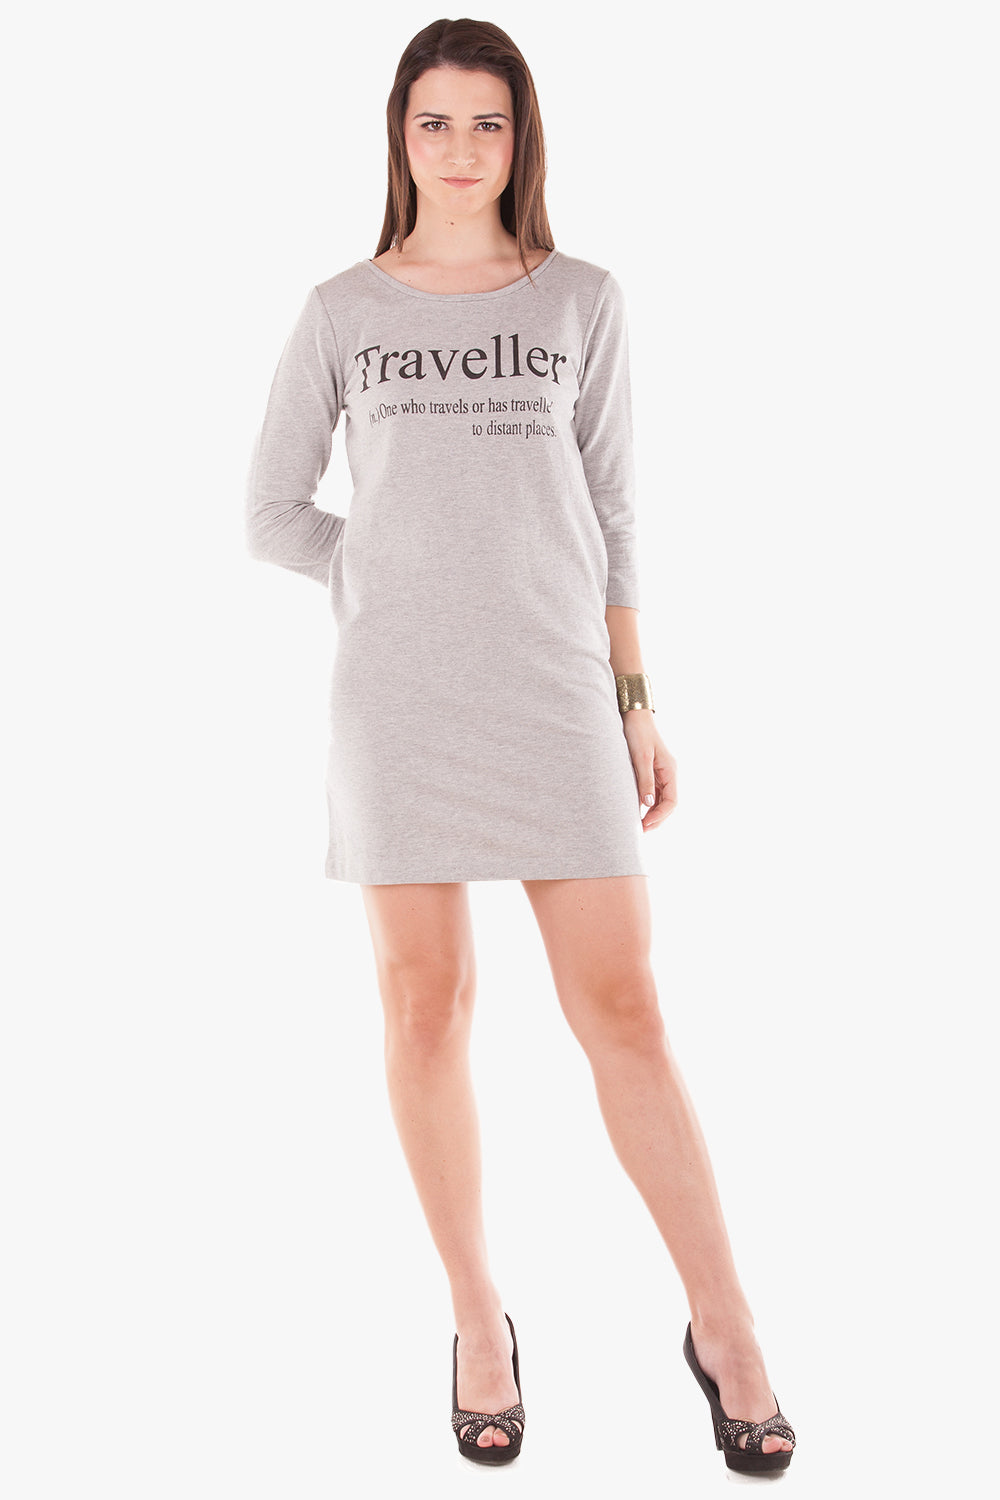 Traveller Dress